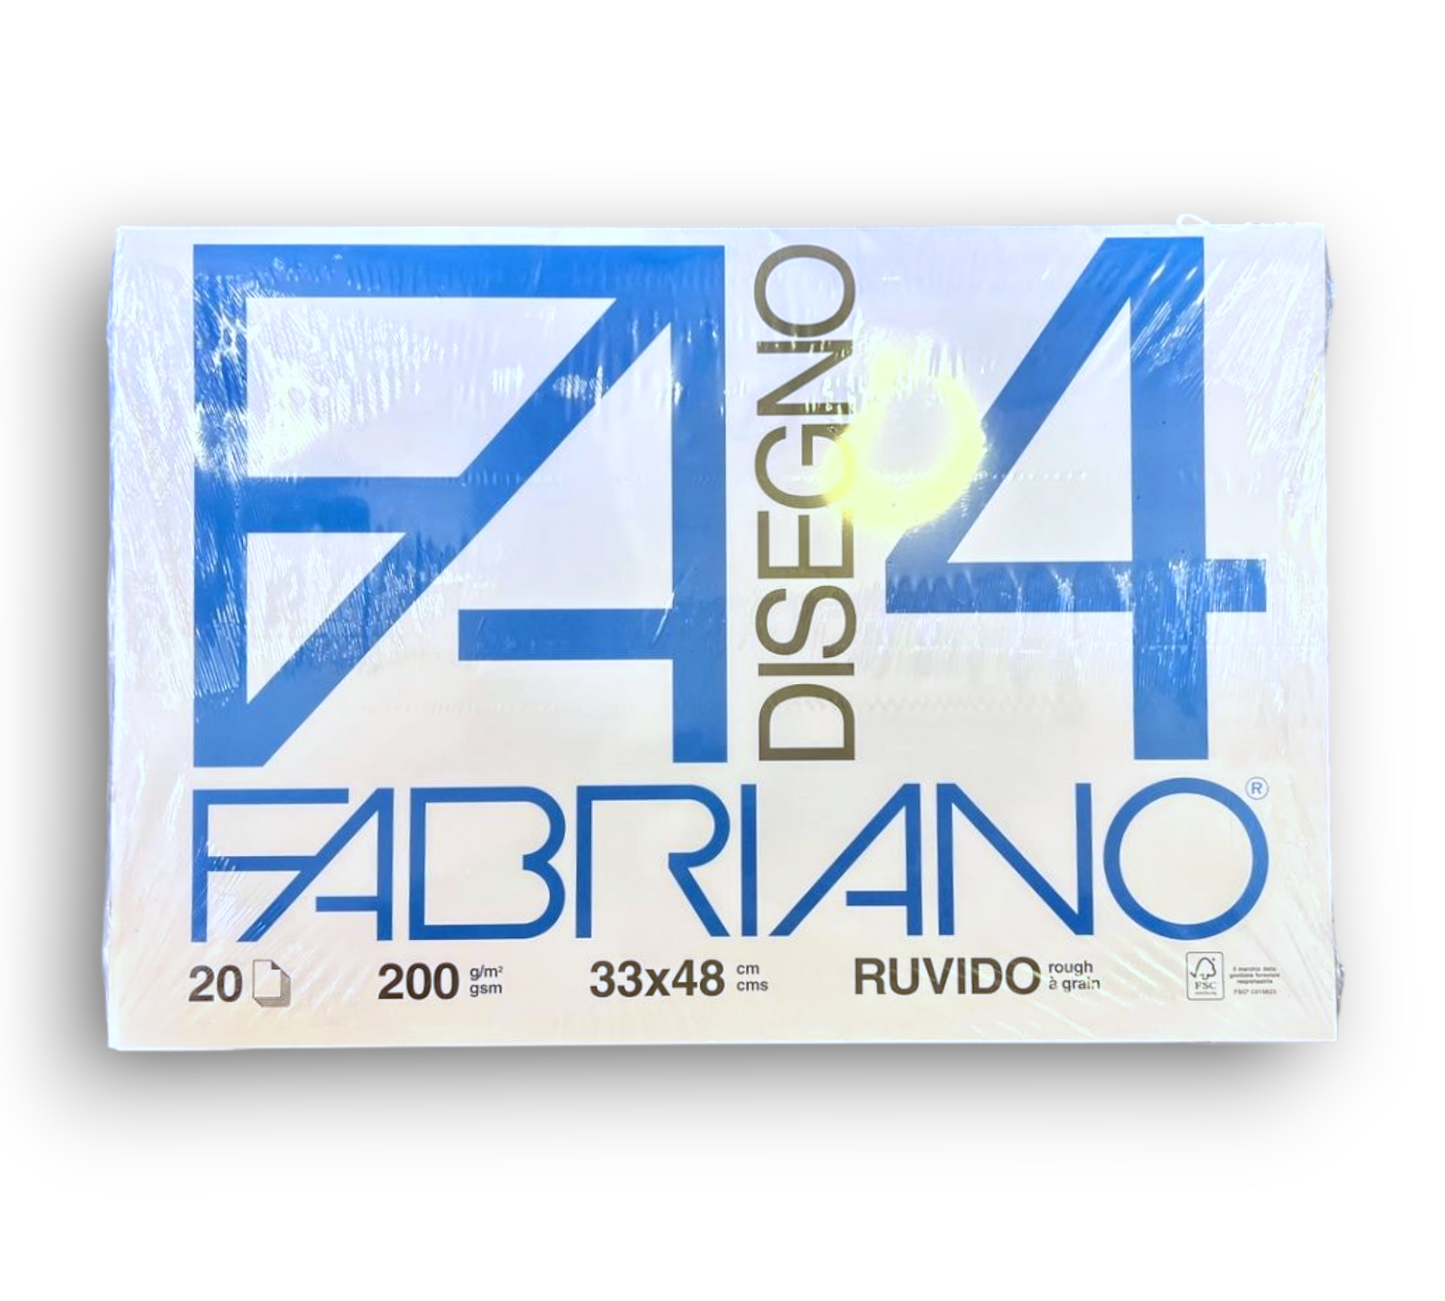 FABRIANO F4 - 33x48 220gr RUVIDO